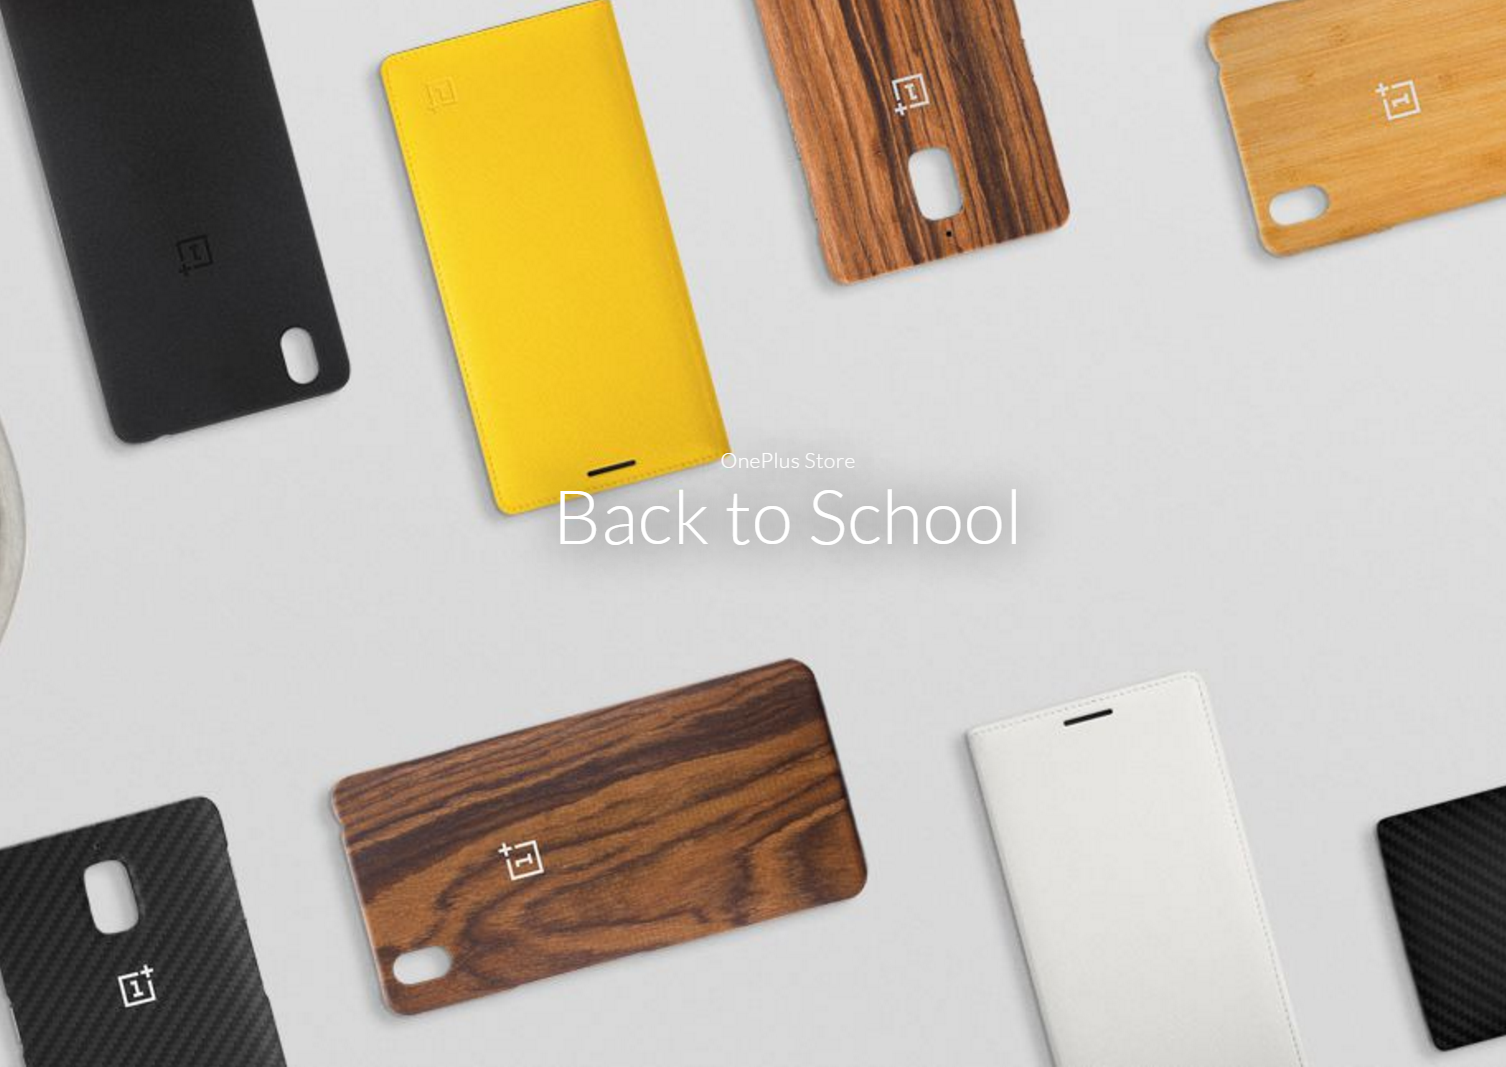 OnePlus back-to-school sale